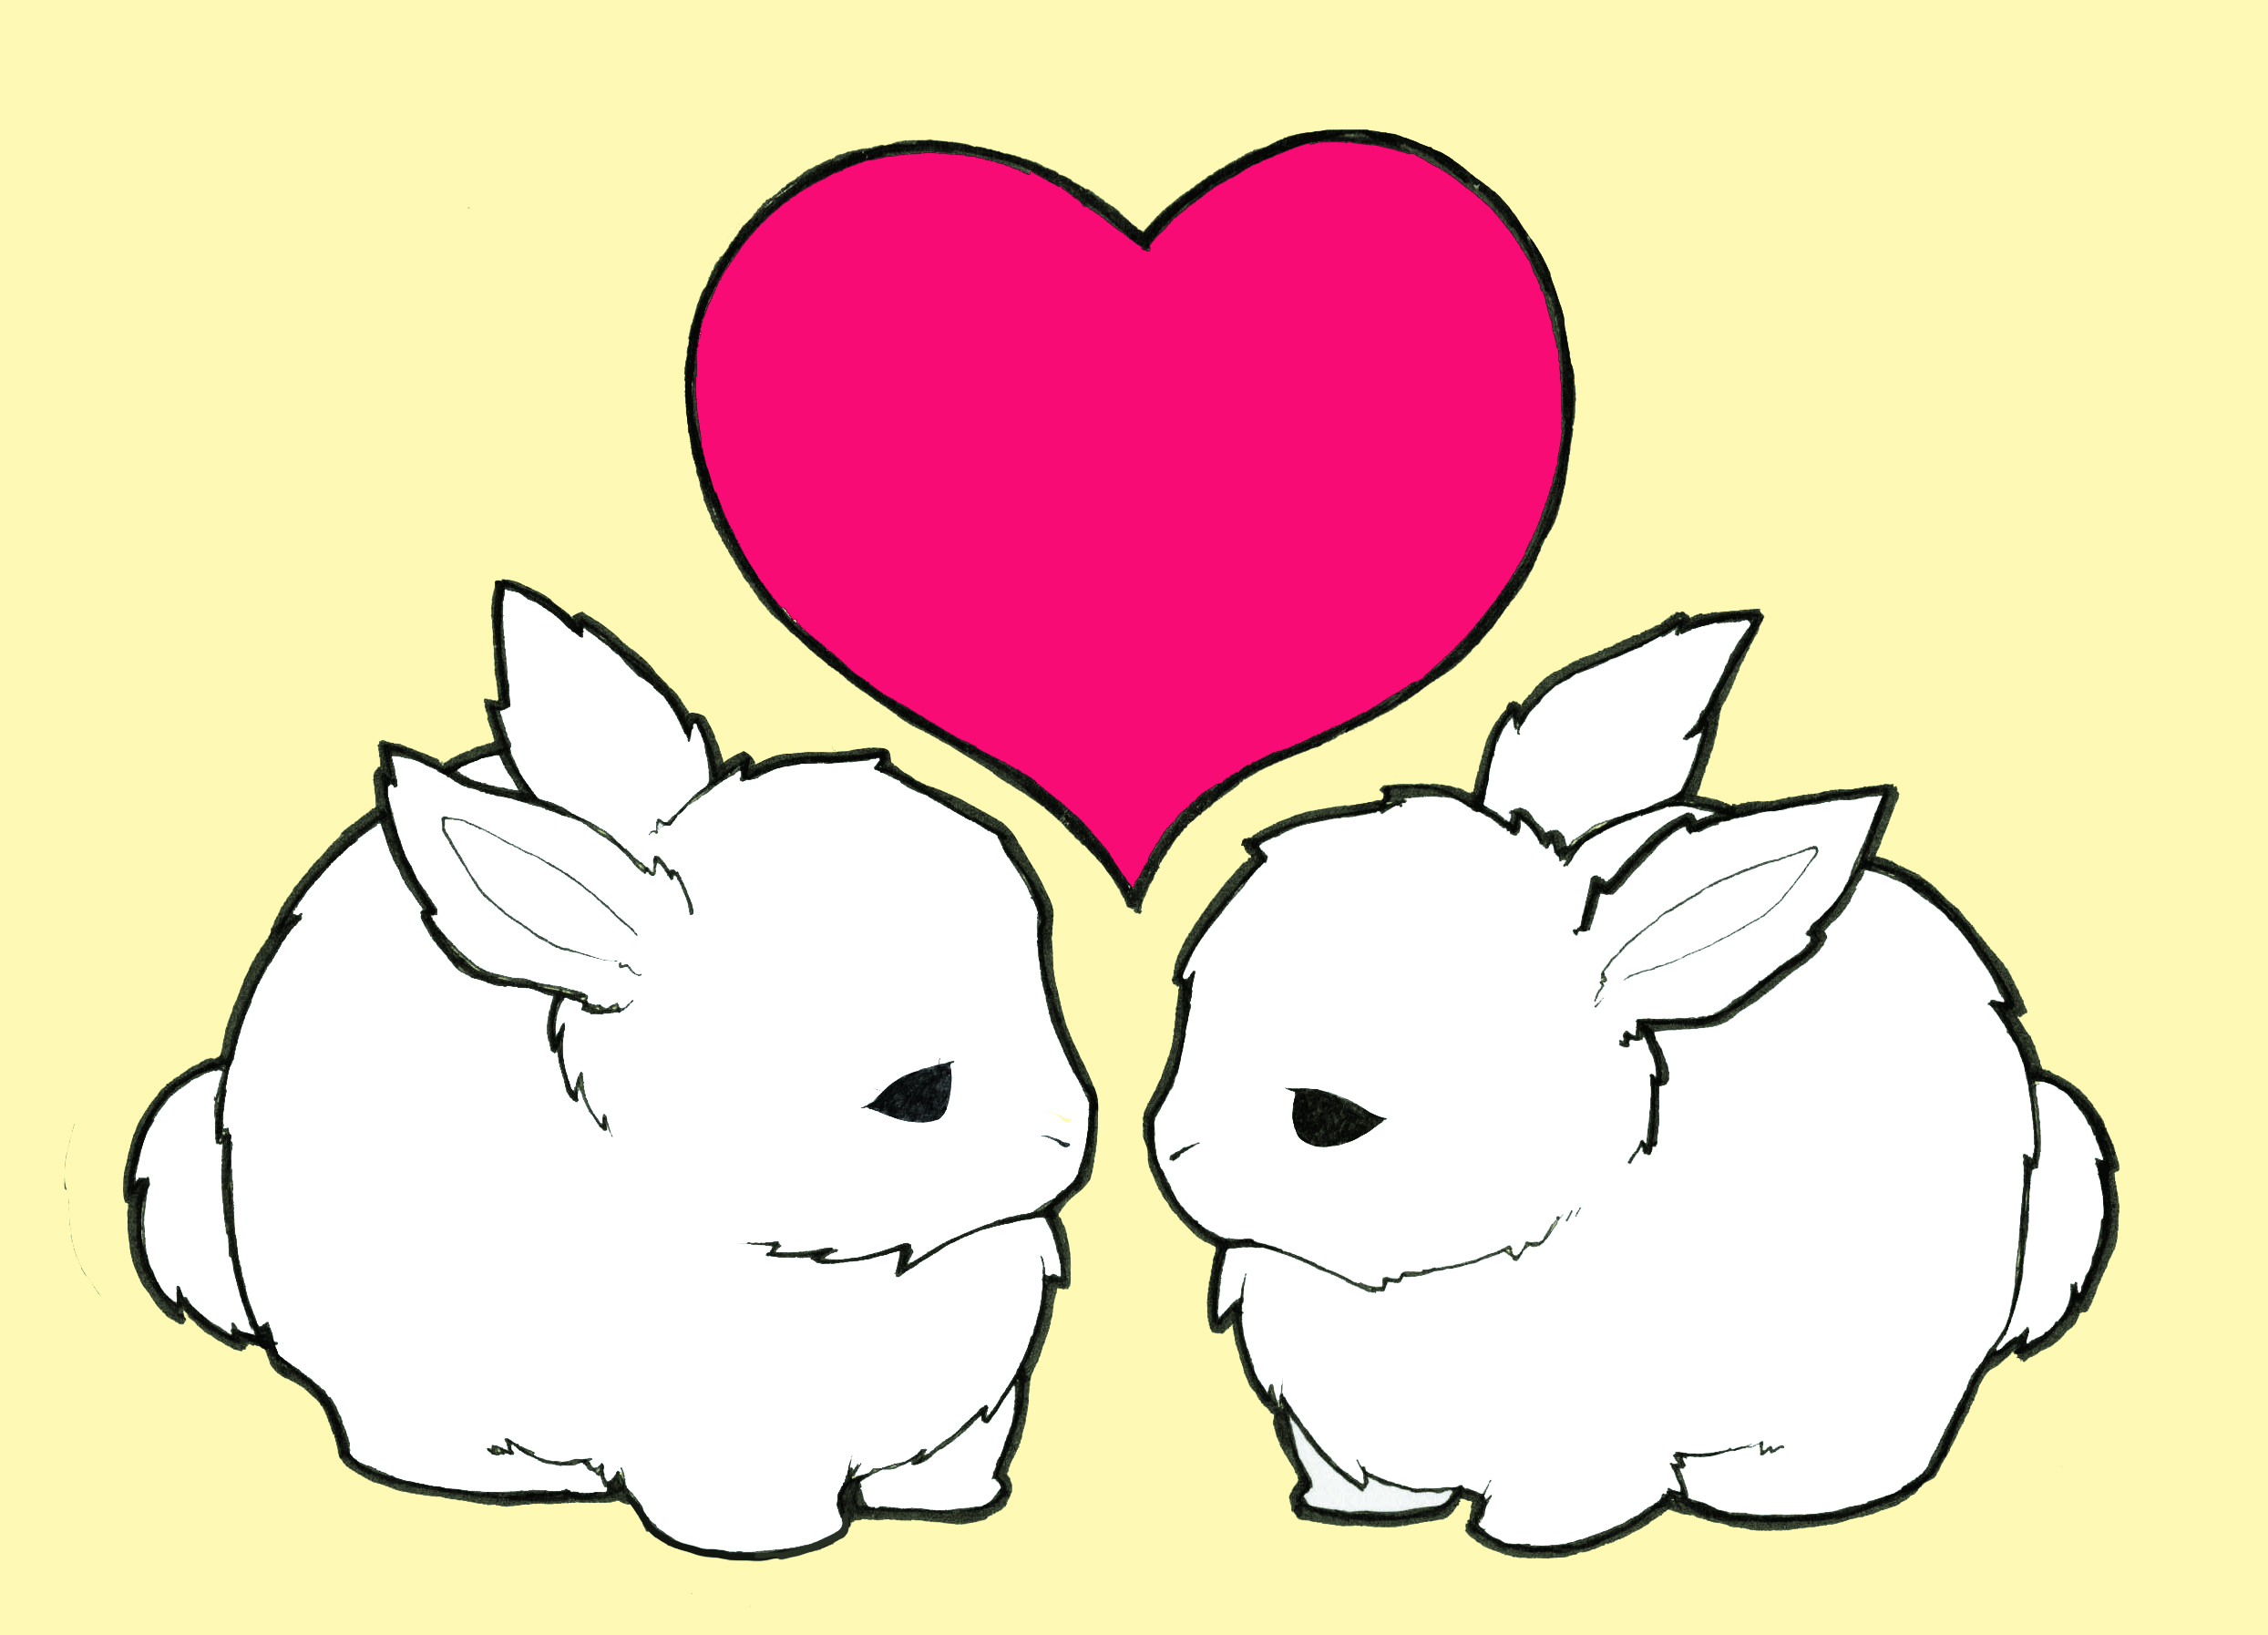 Bunny bunny love